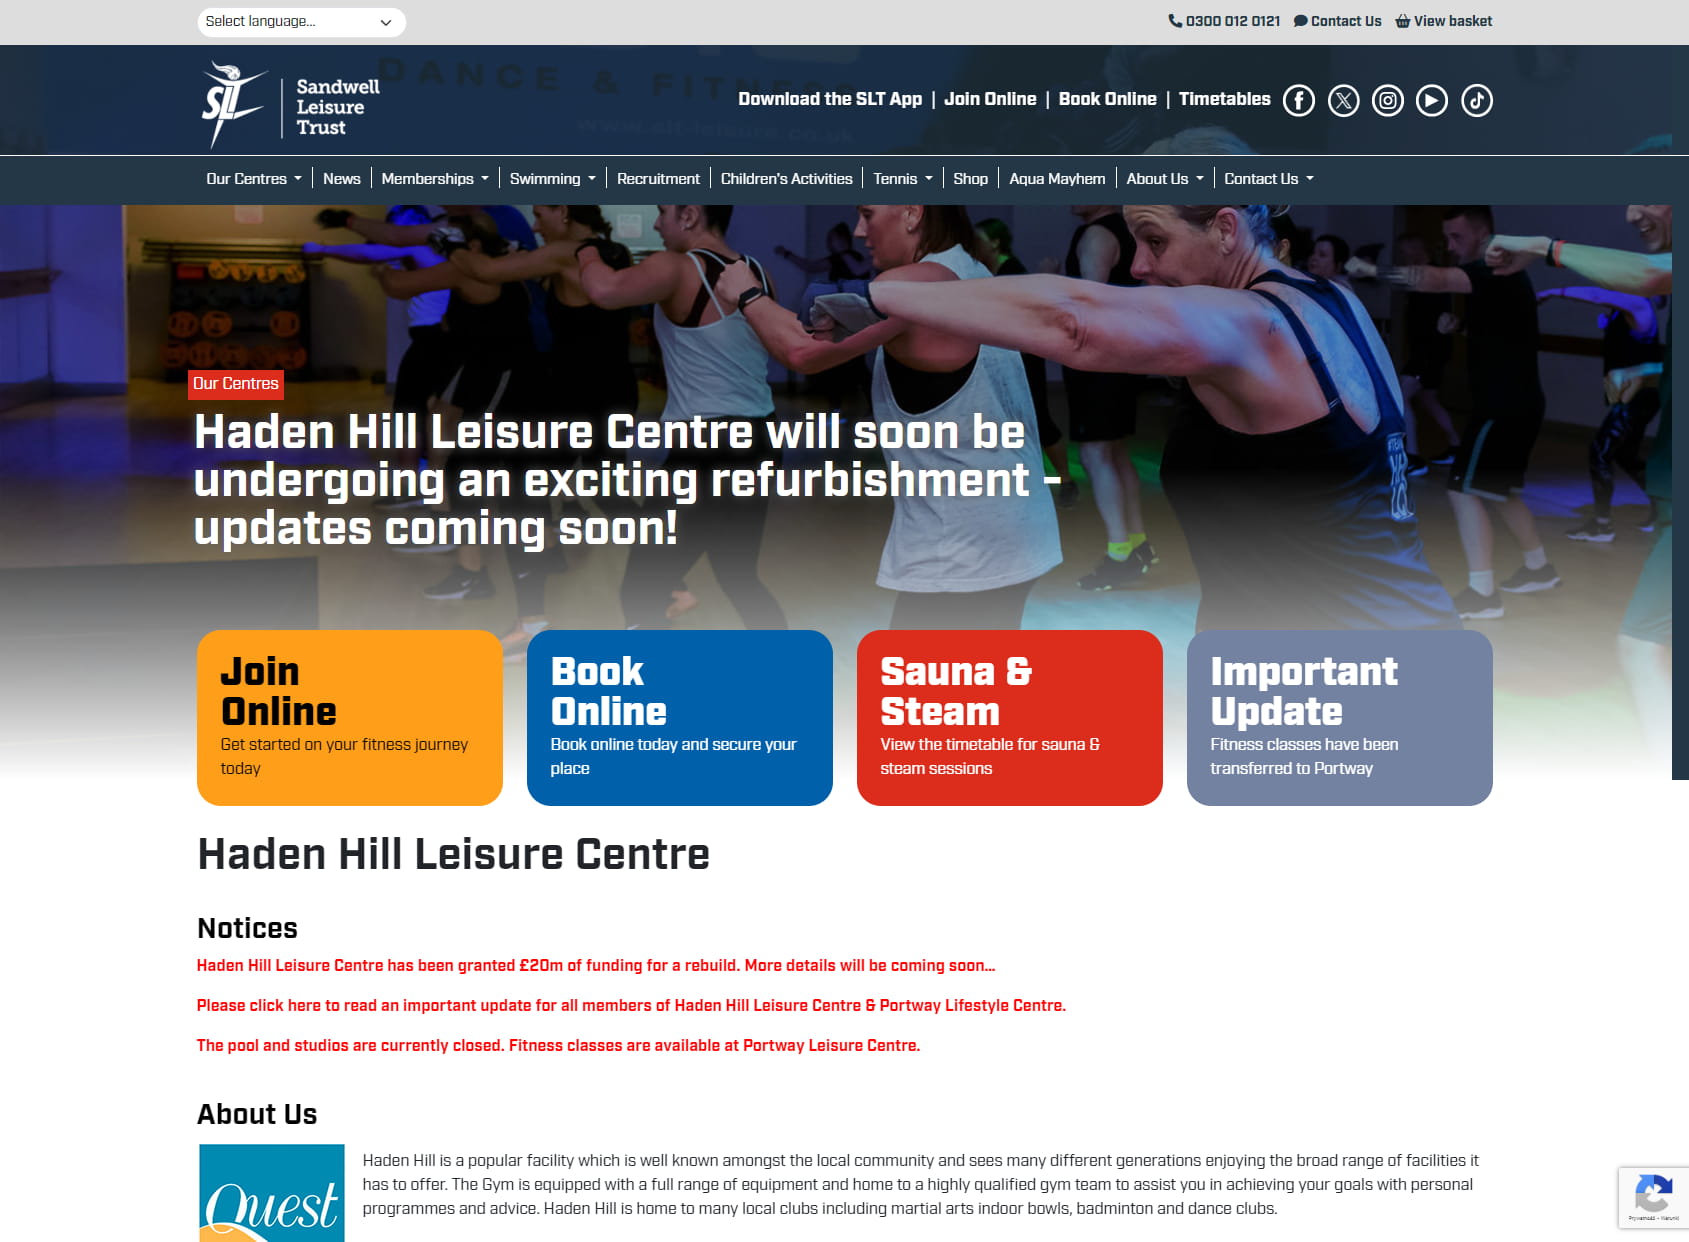 Haden Hill Leisure Centre